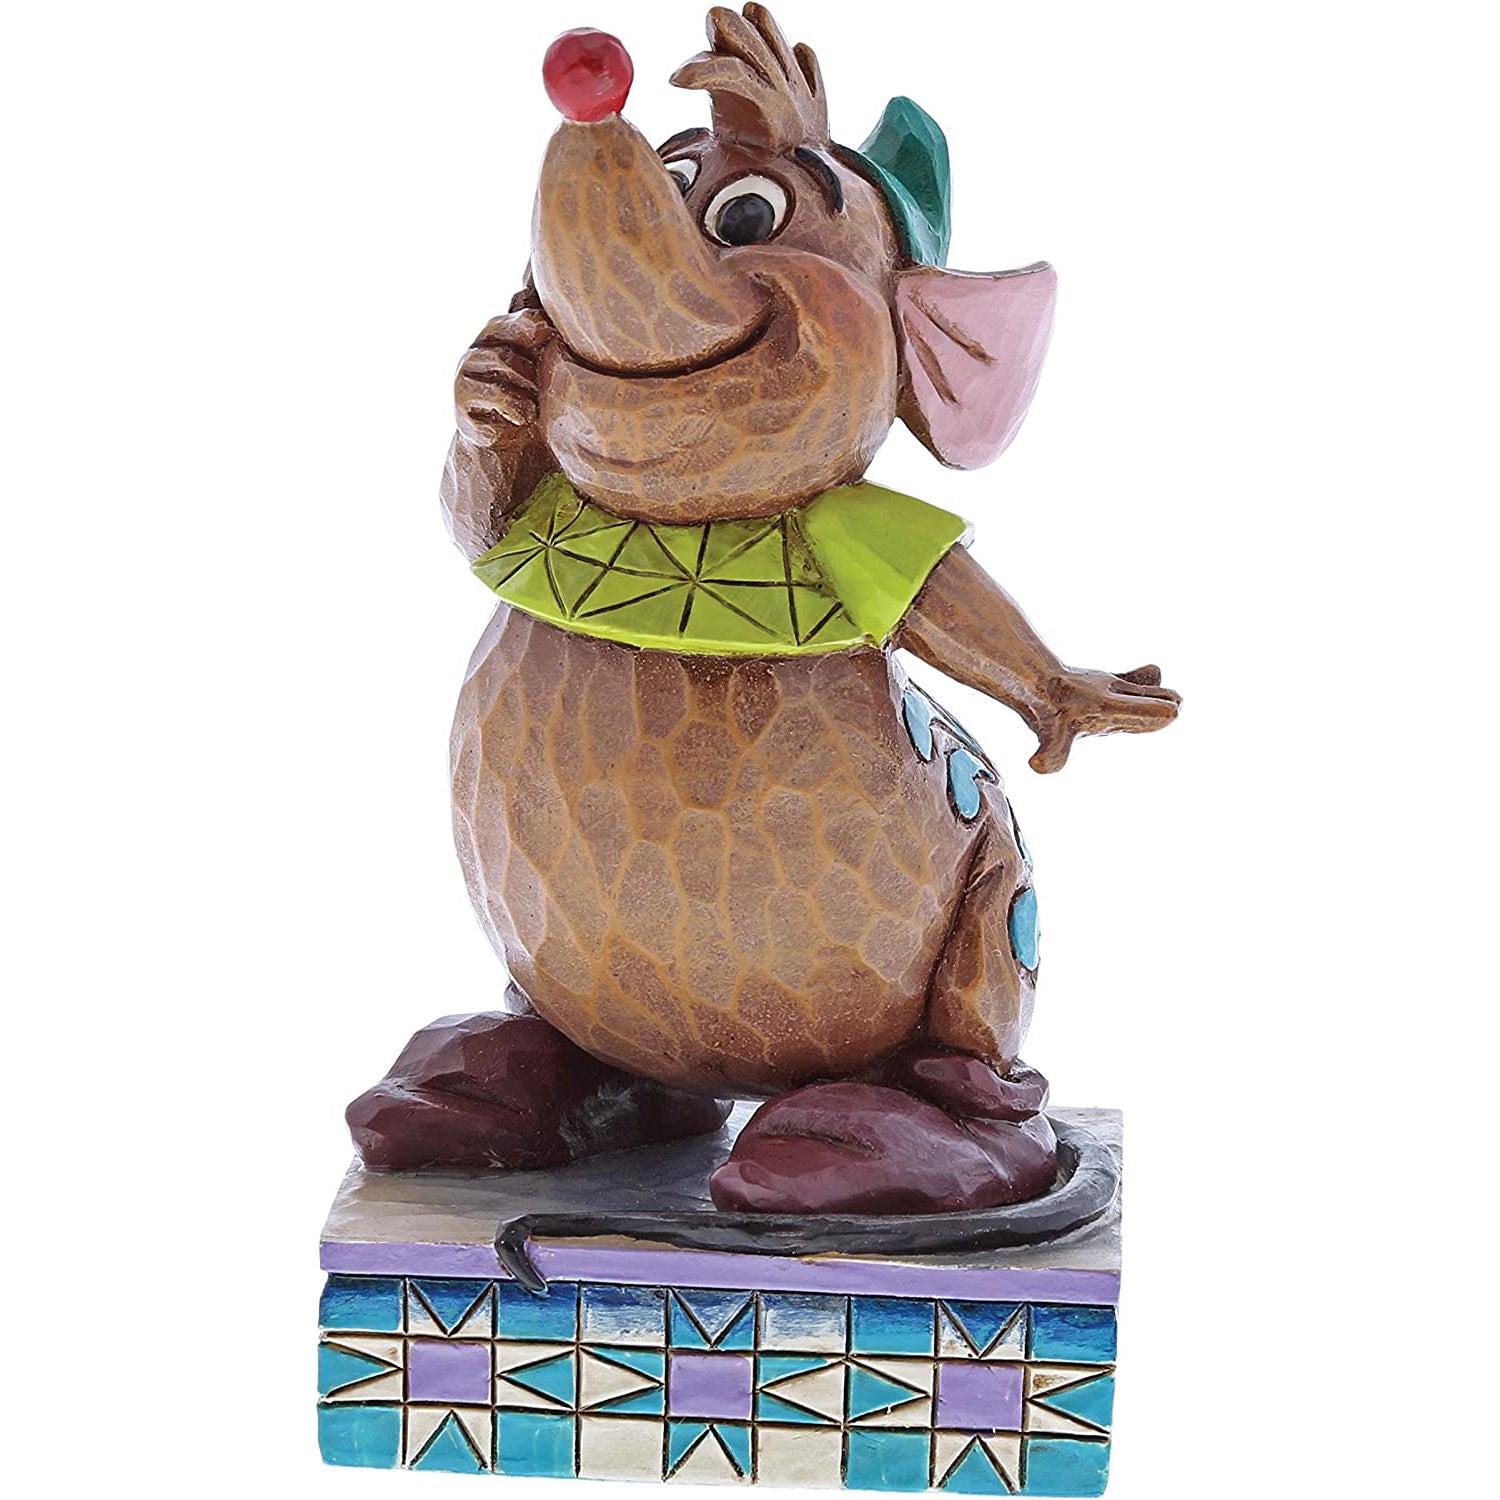 Gus-Figur-Disney-Traditions-by-Jim-Shore-Berlindeluxe-hut-schuhe